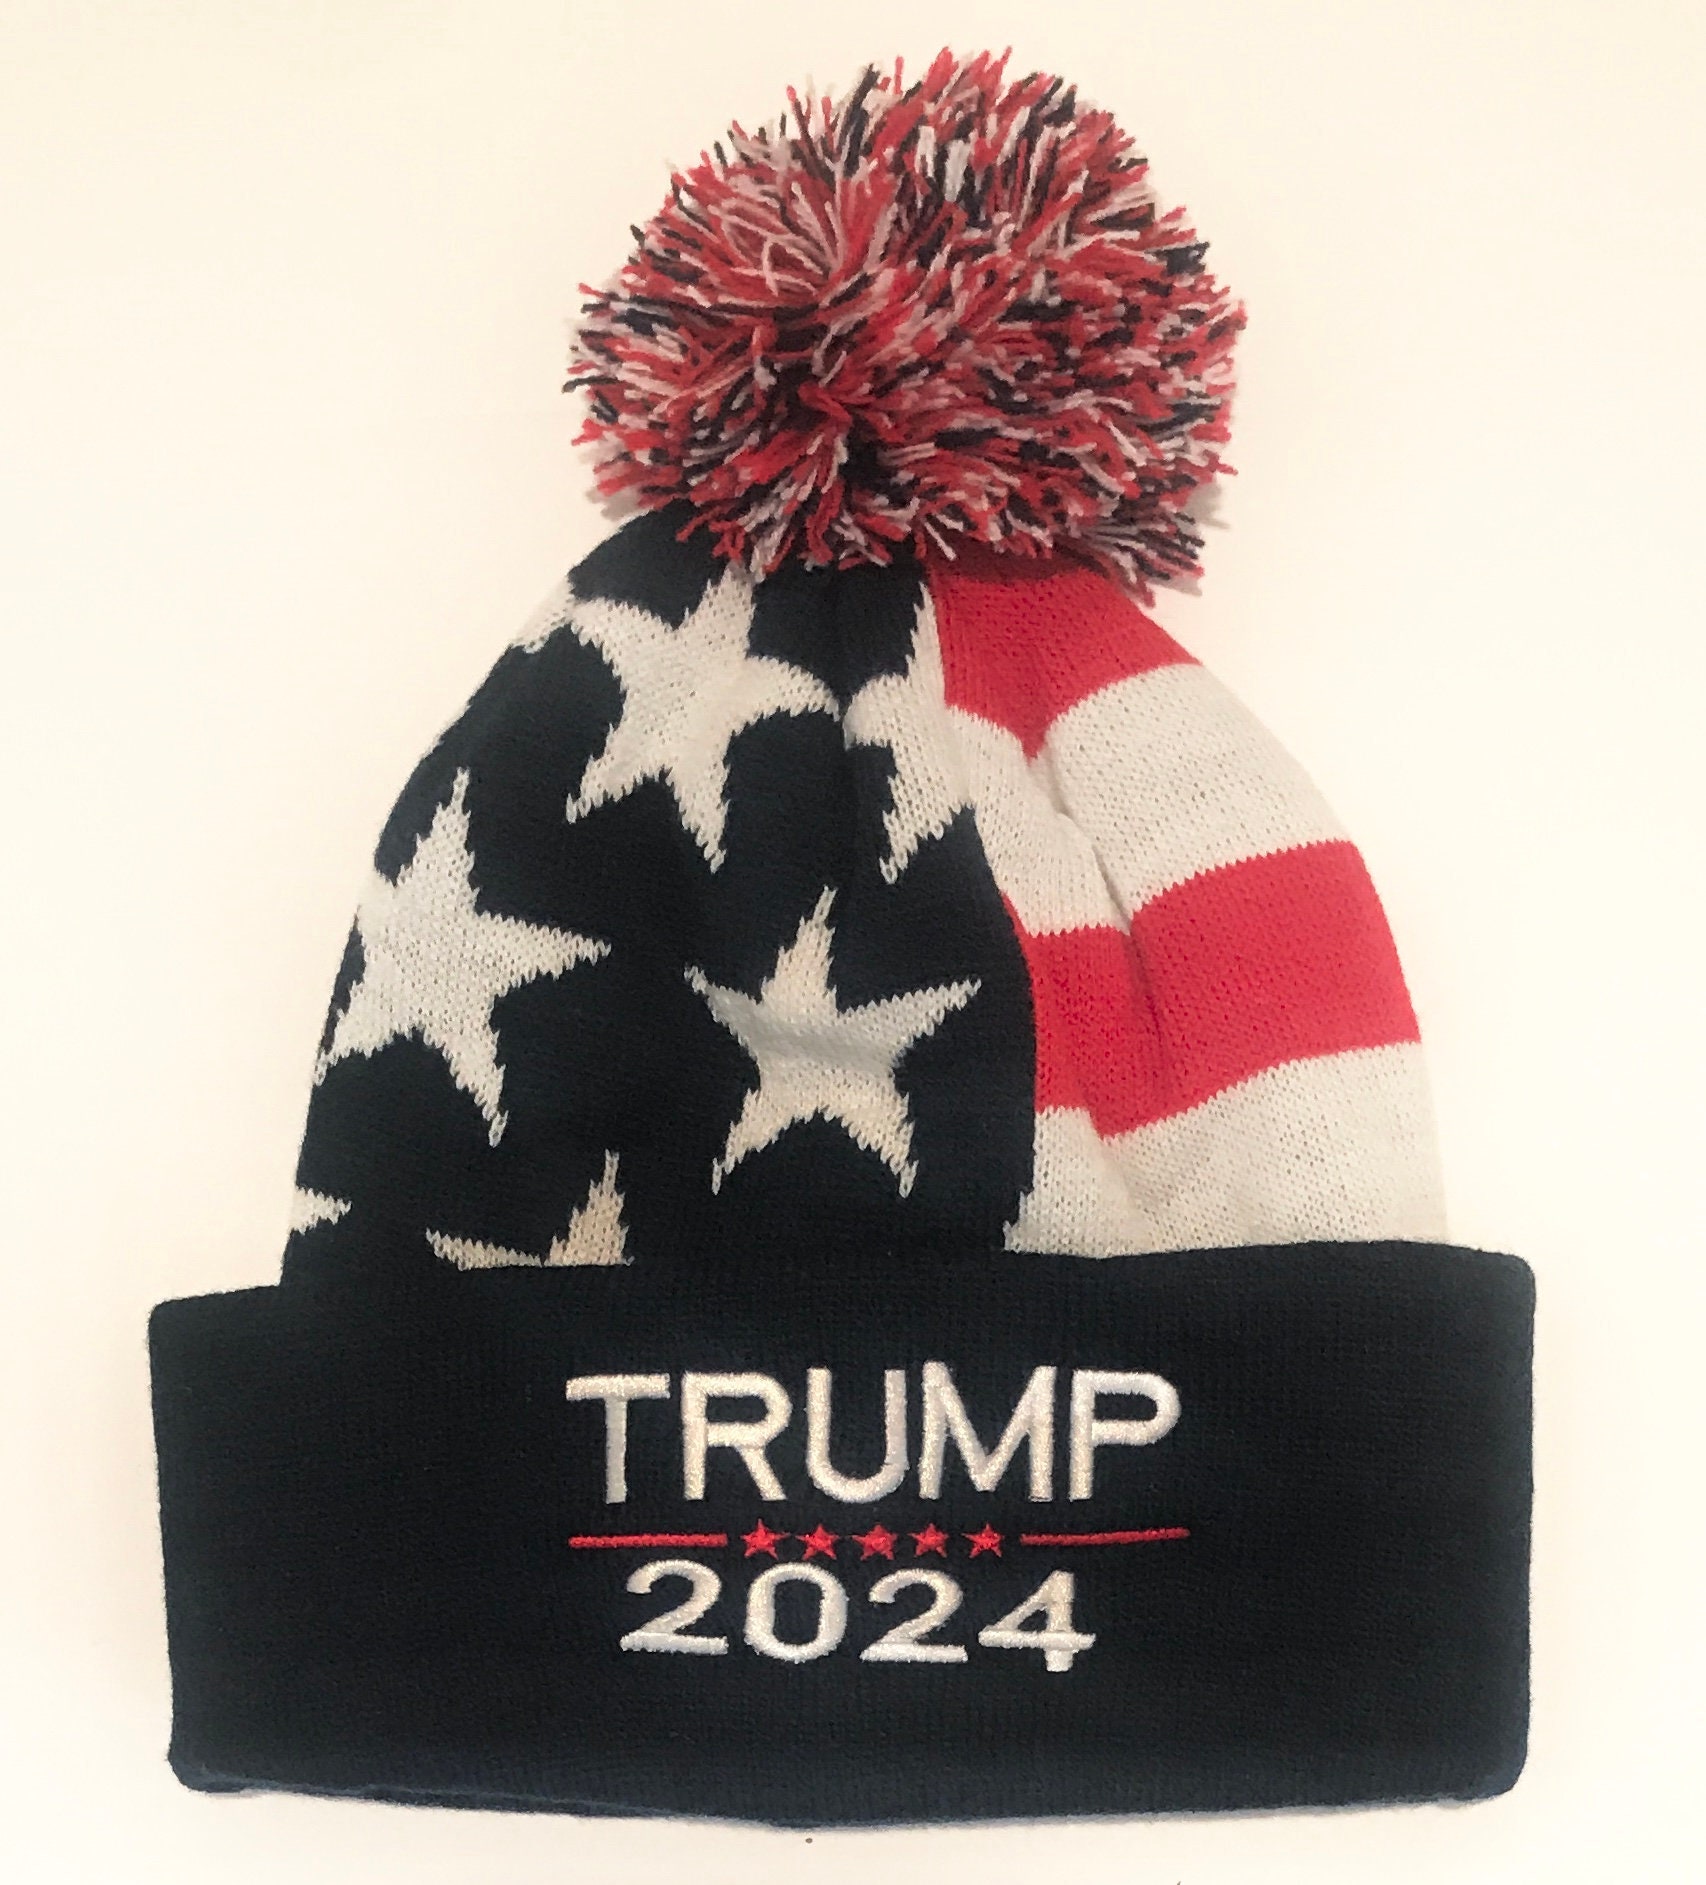 Donald Trump 2020 Hat Beanie Make America Great Again Knit Skull MAGA Hats Black